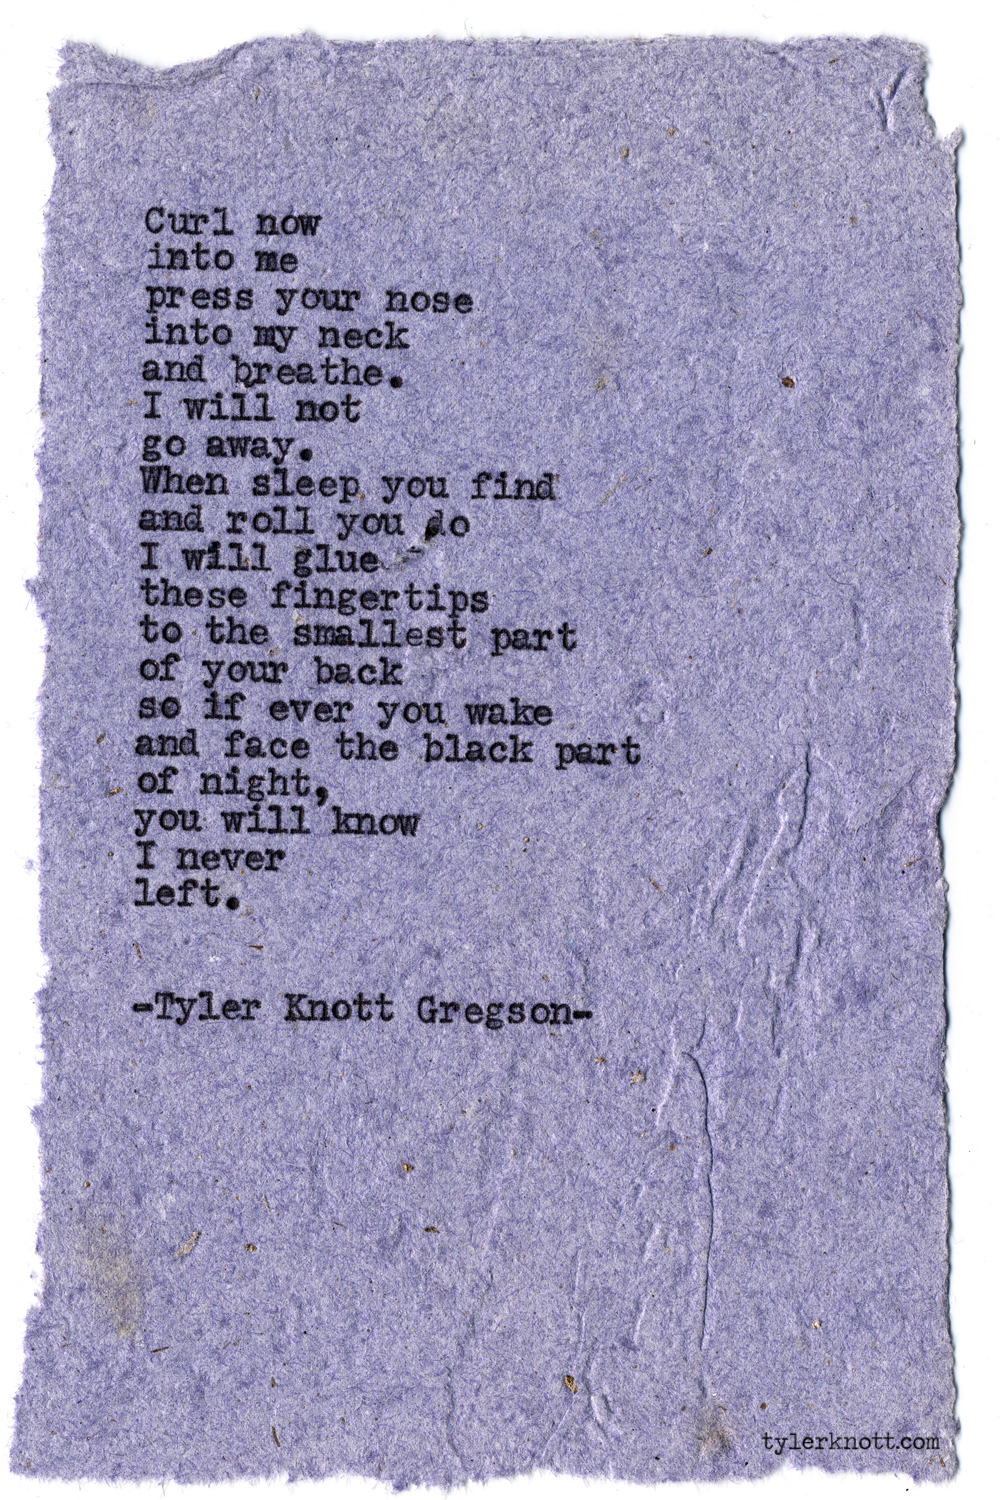 Tyler Knott Gregson — Typewriter Series #675 by Tyler Knott Gregson